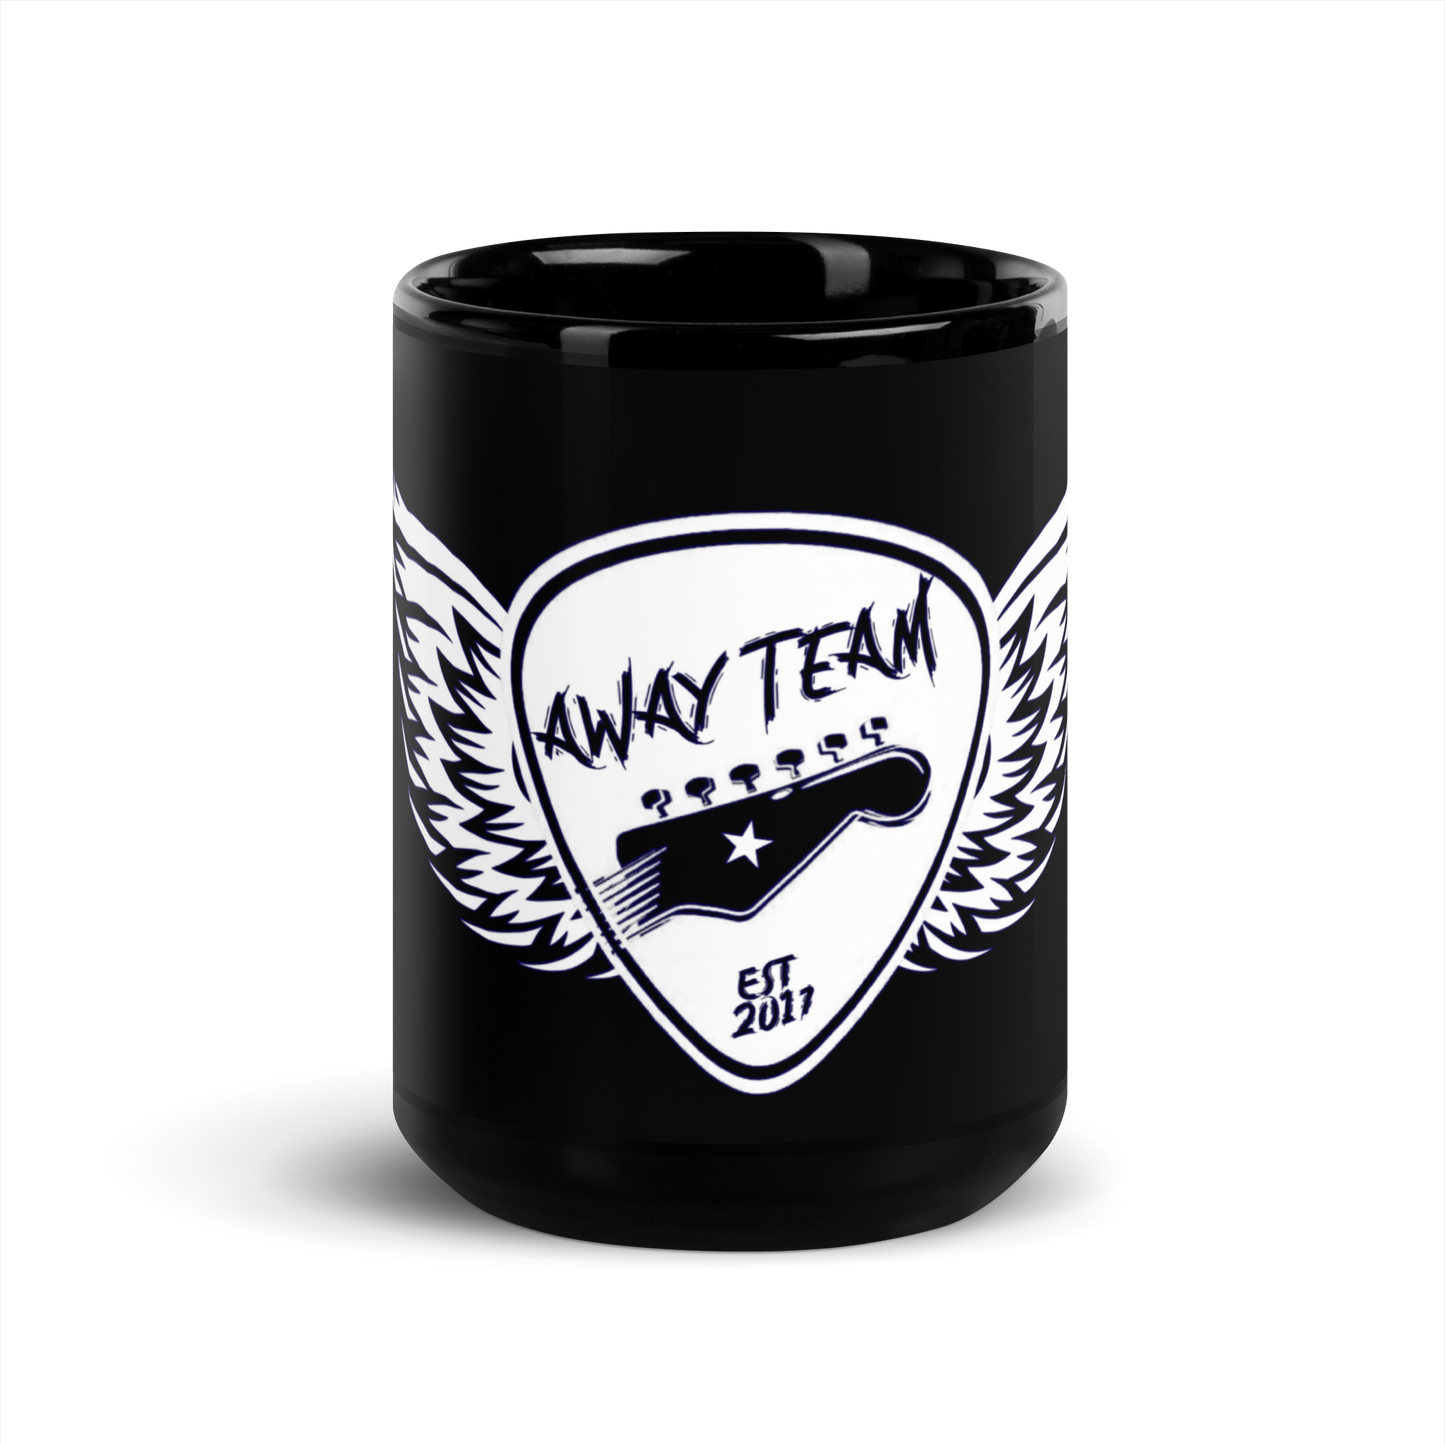 Away Team Black Glossy Mug